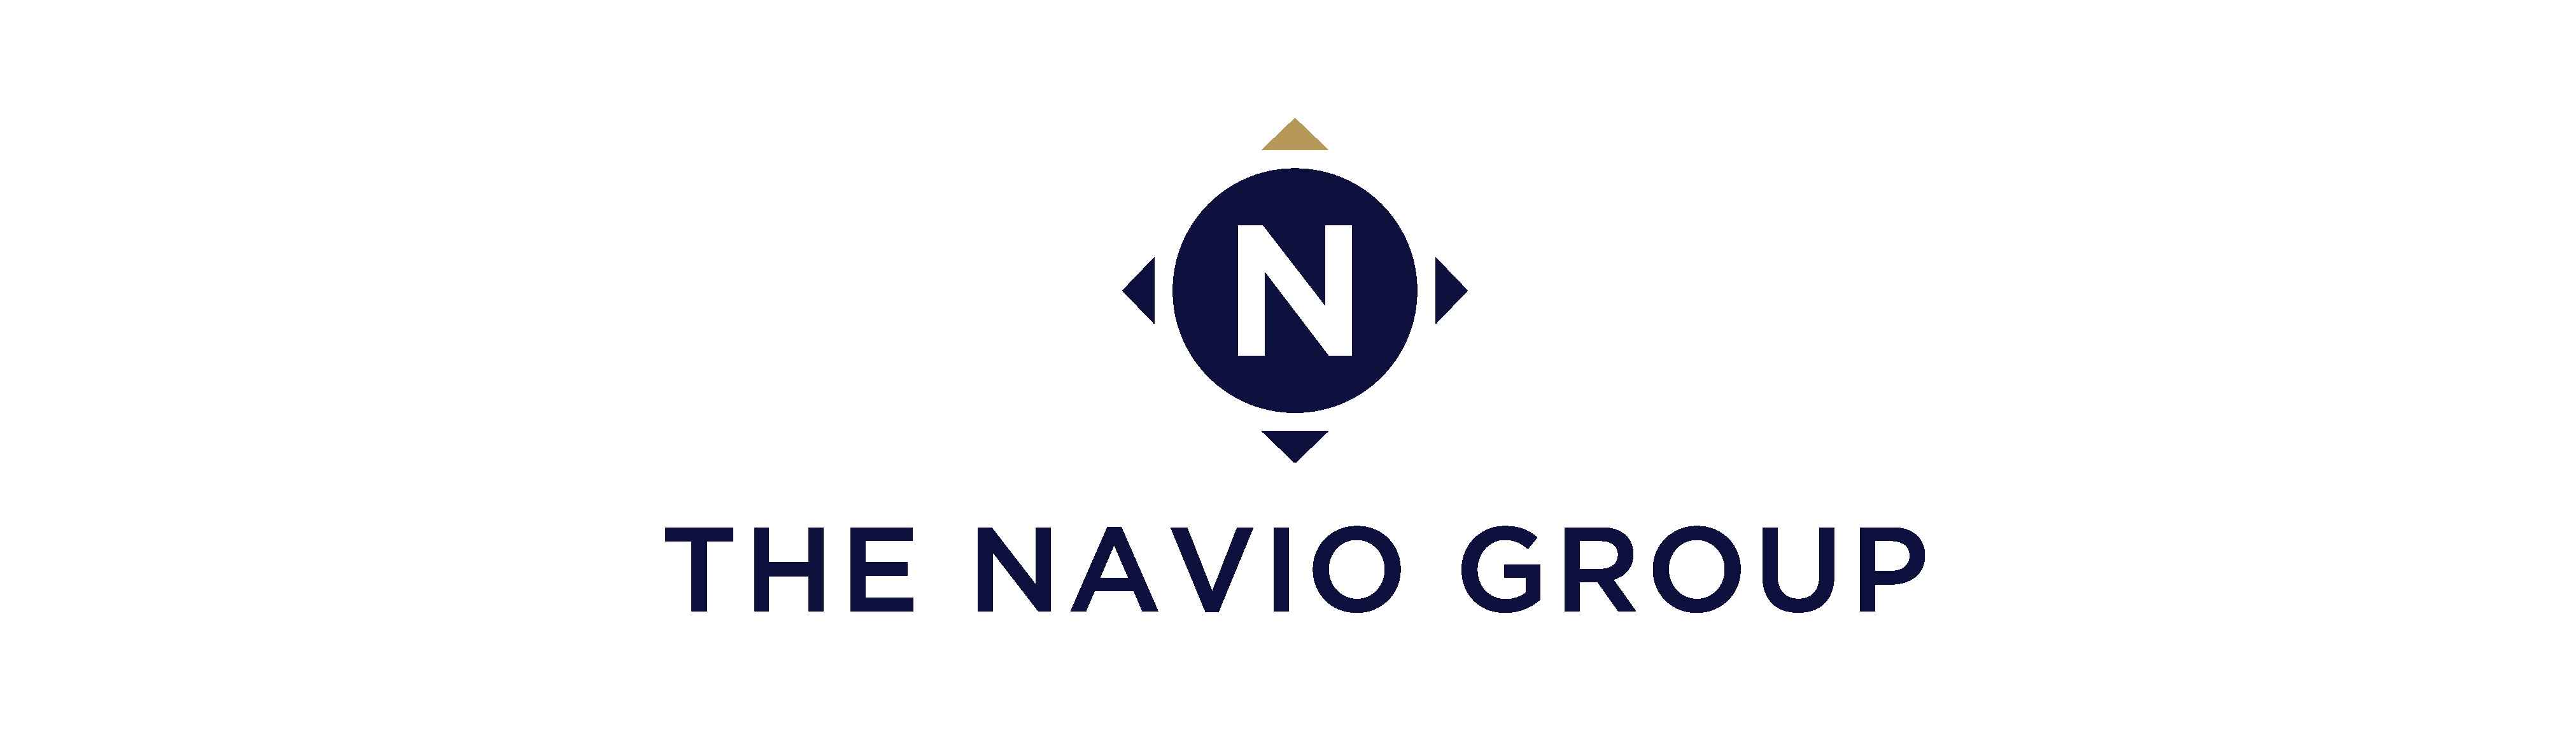 Welcome to The Navio Group